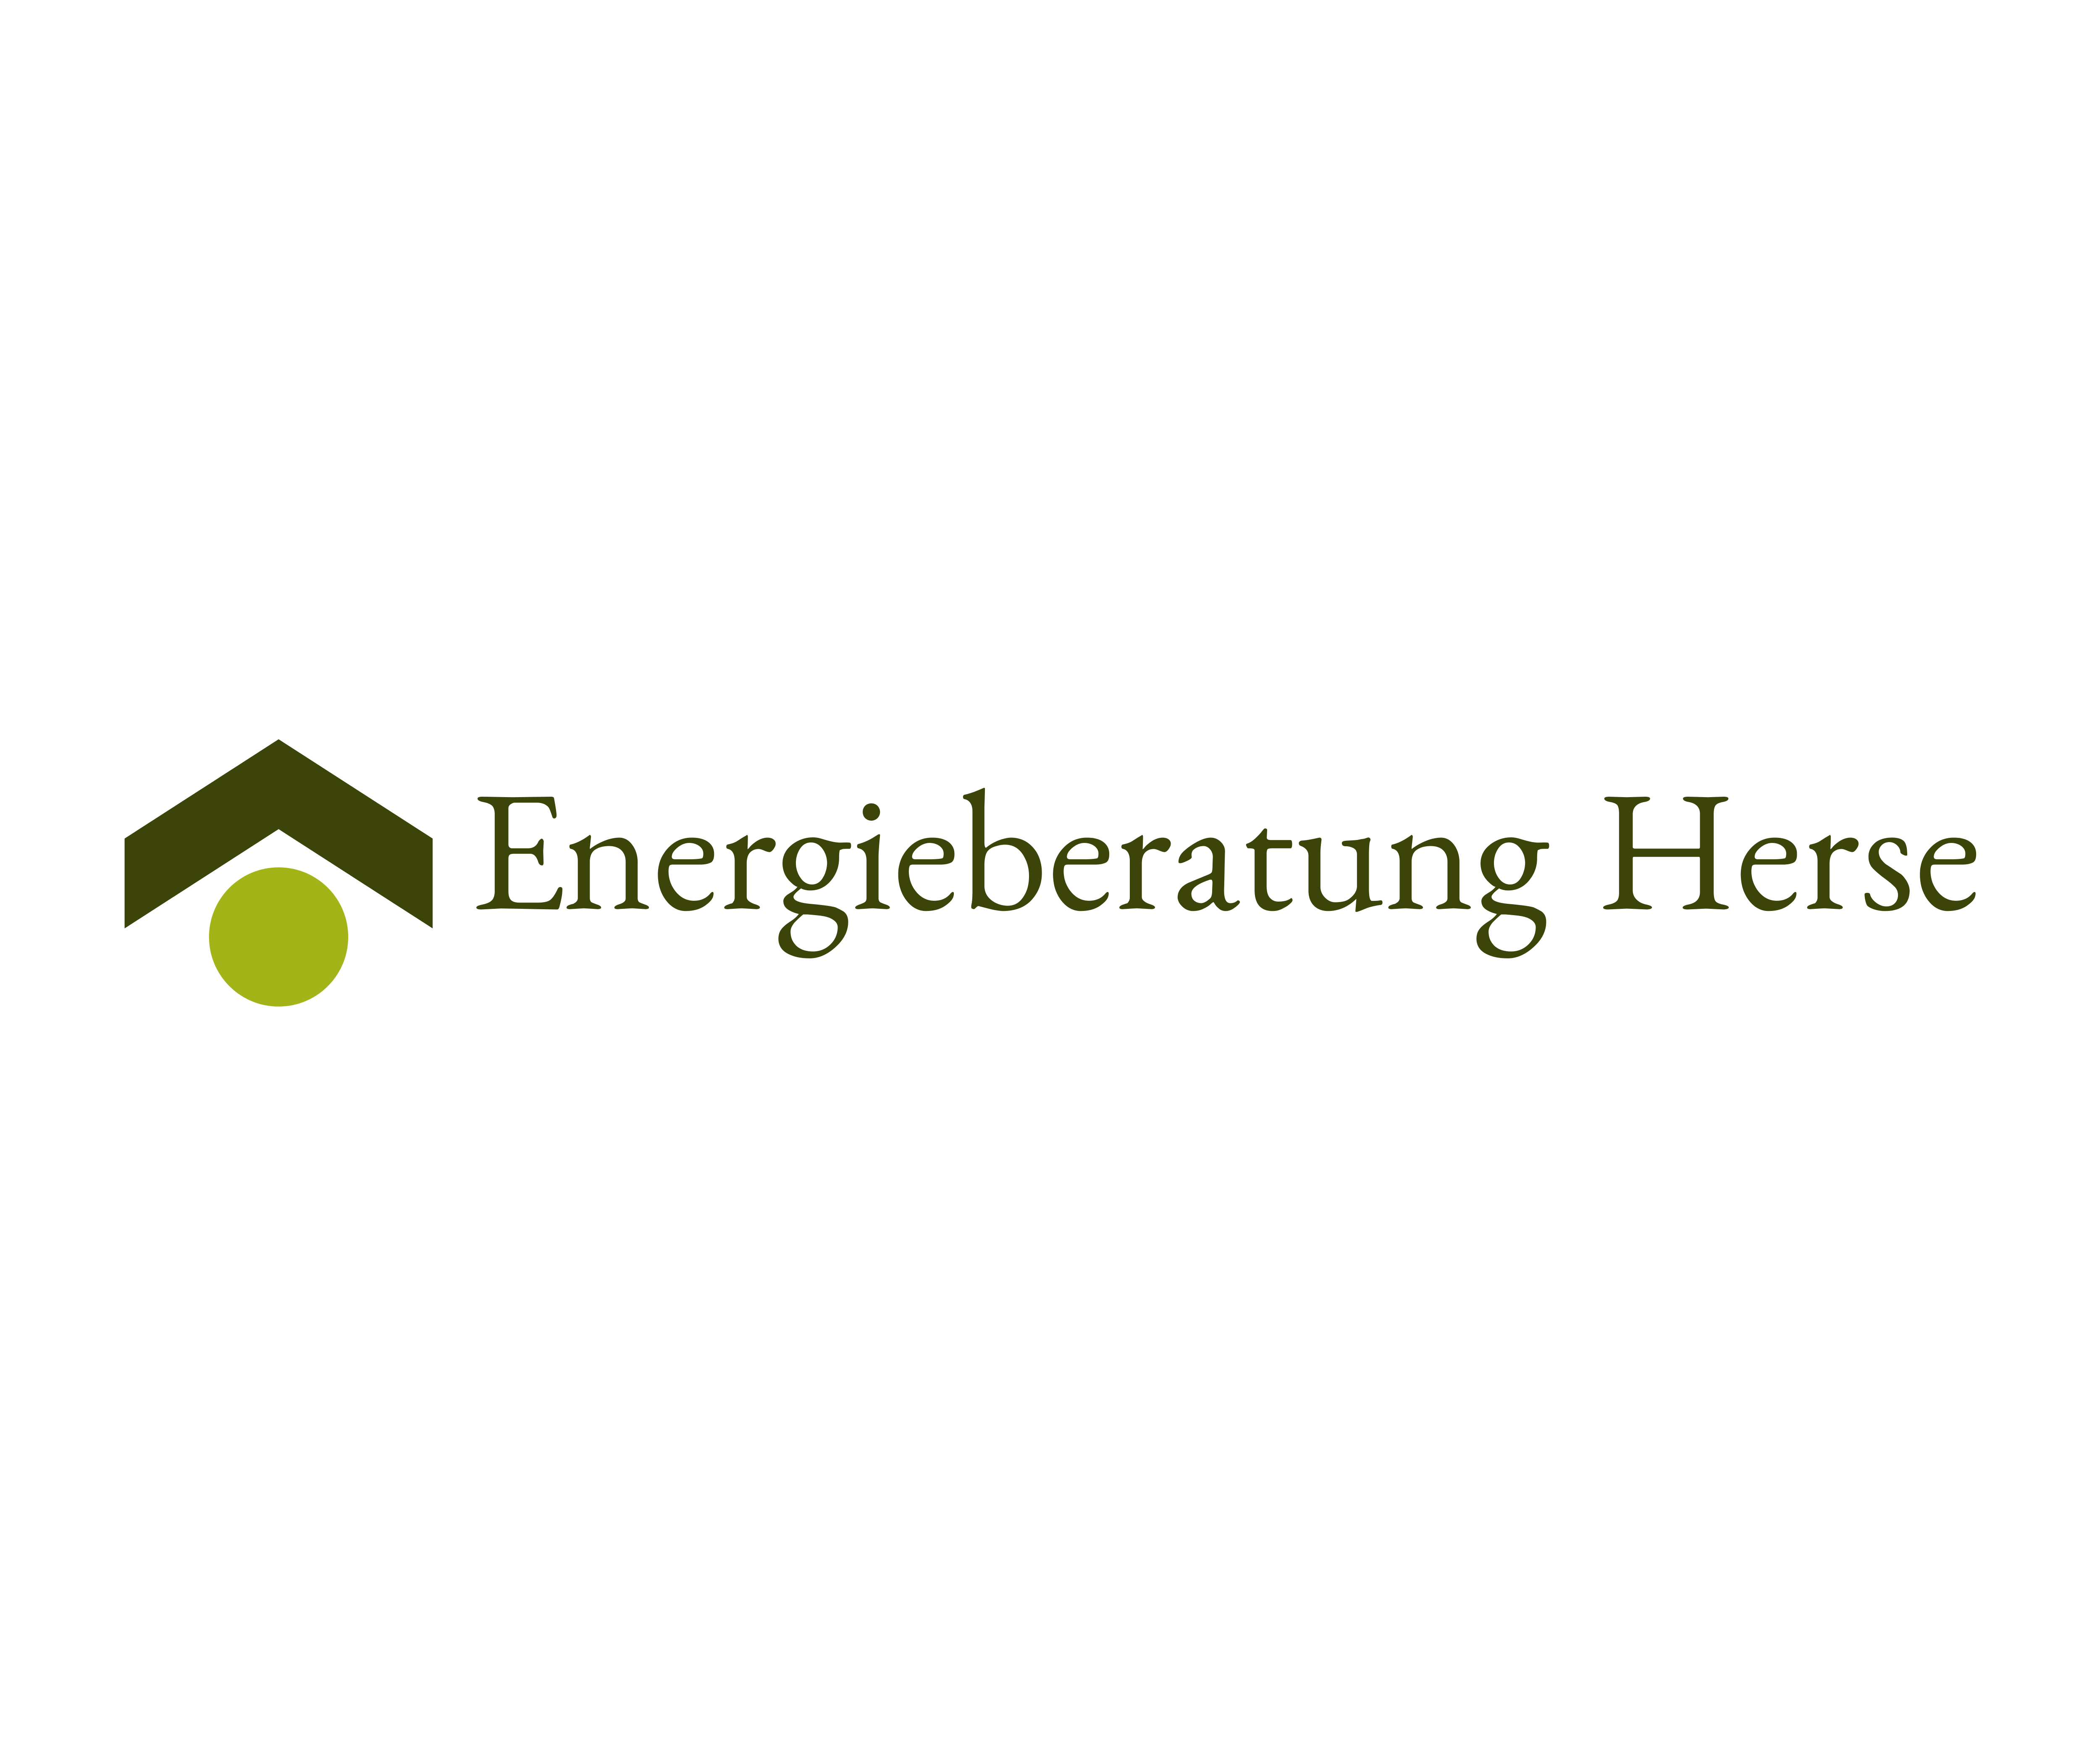 (c) Energieberatung-herse.de